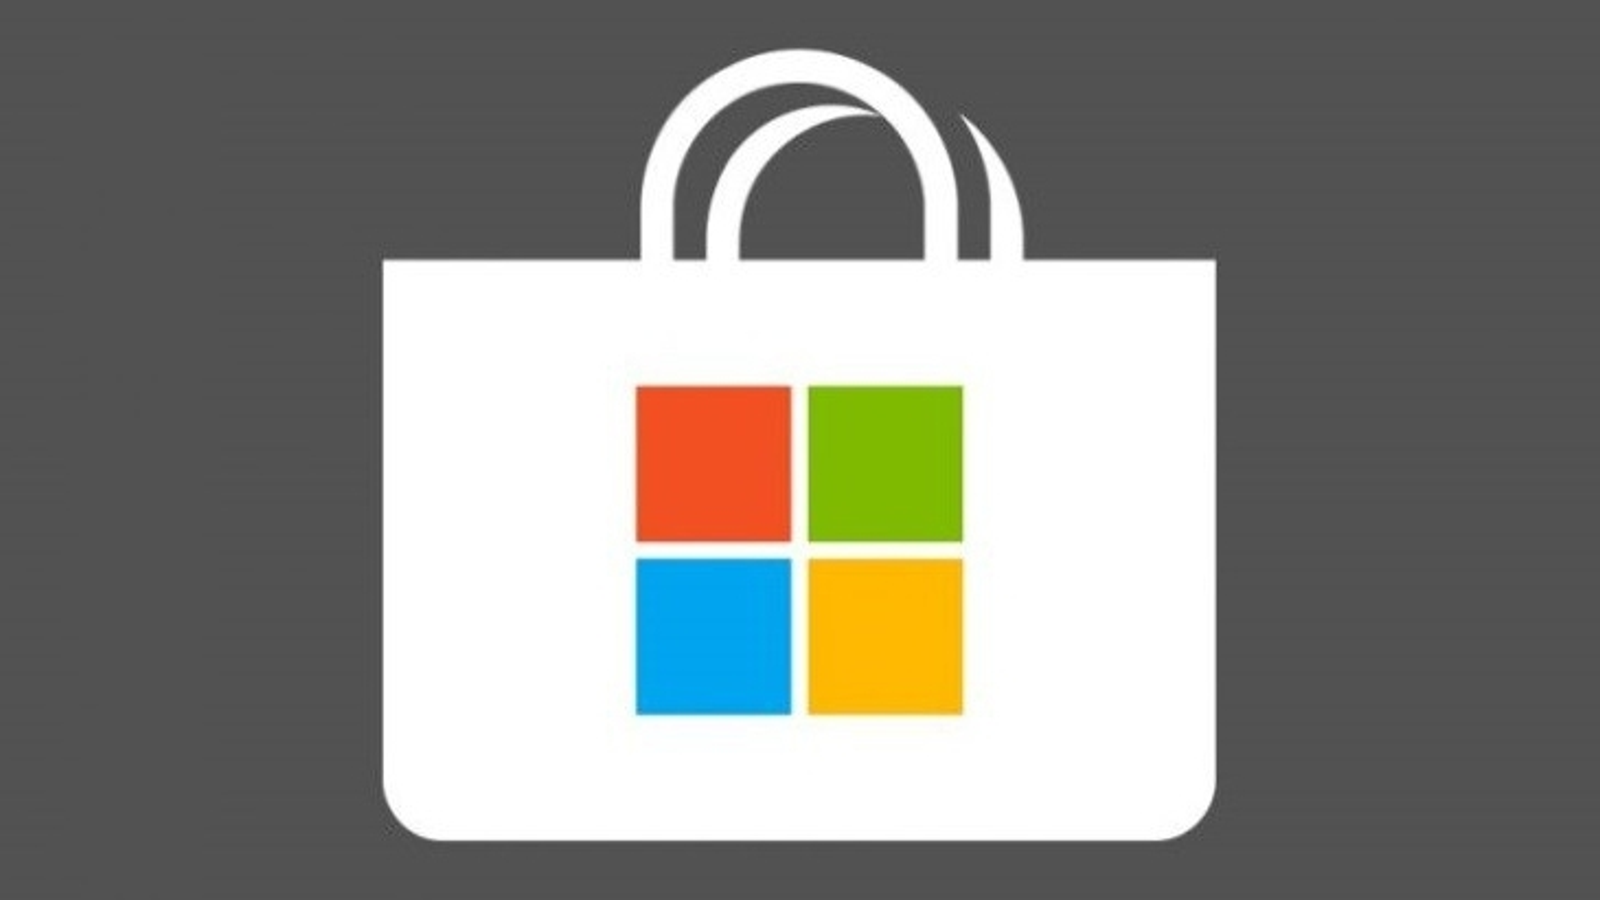 Shopping from Microsoft Start